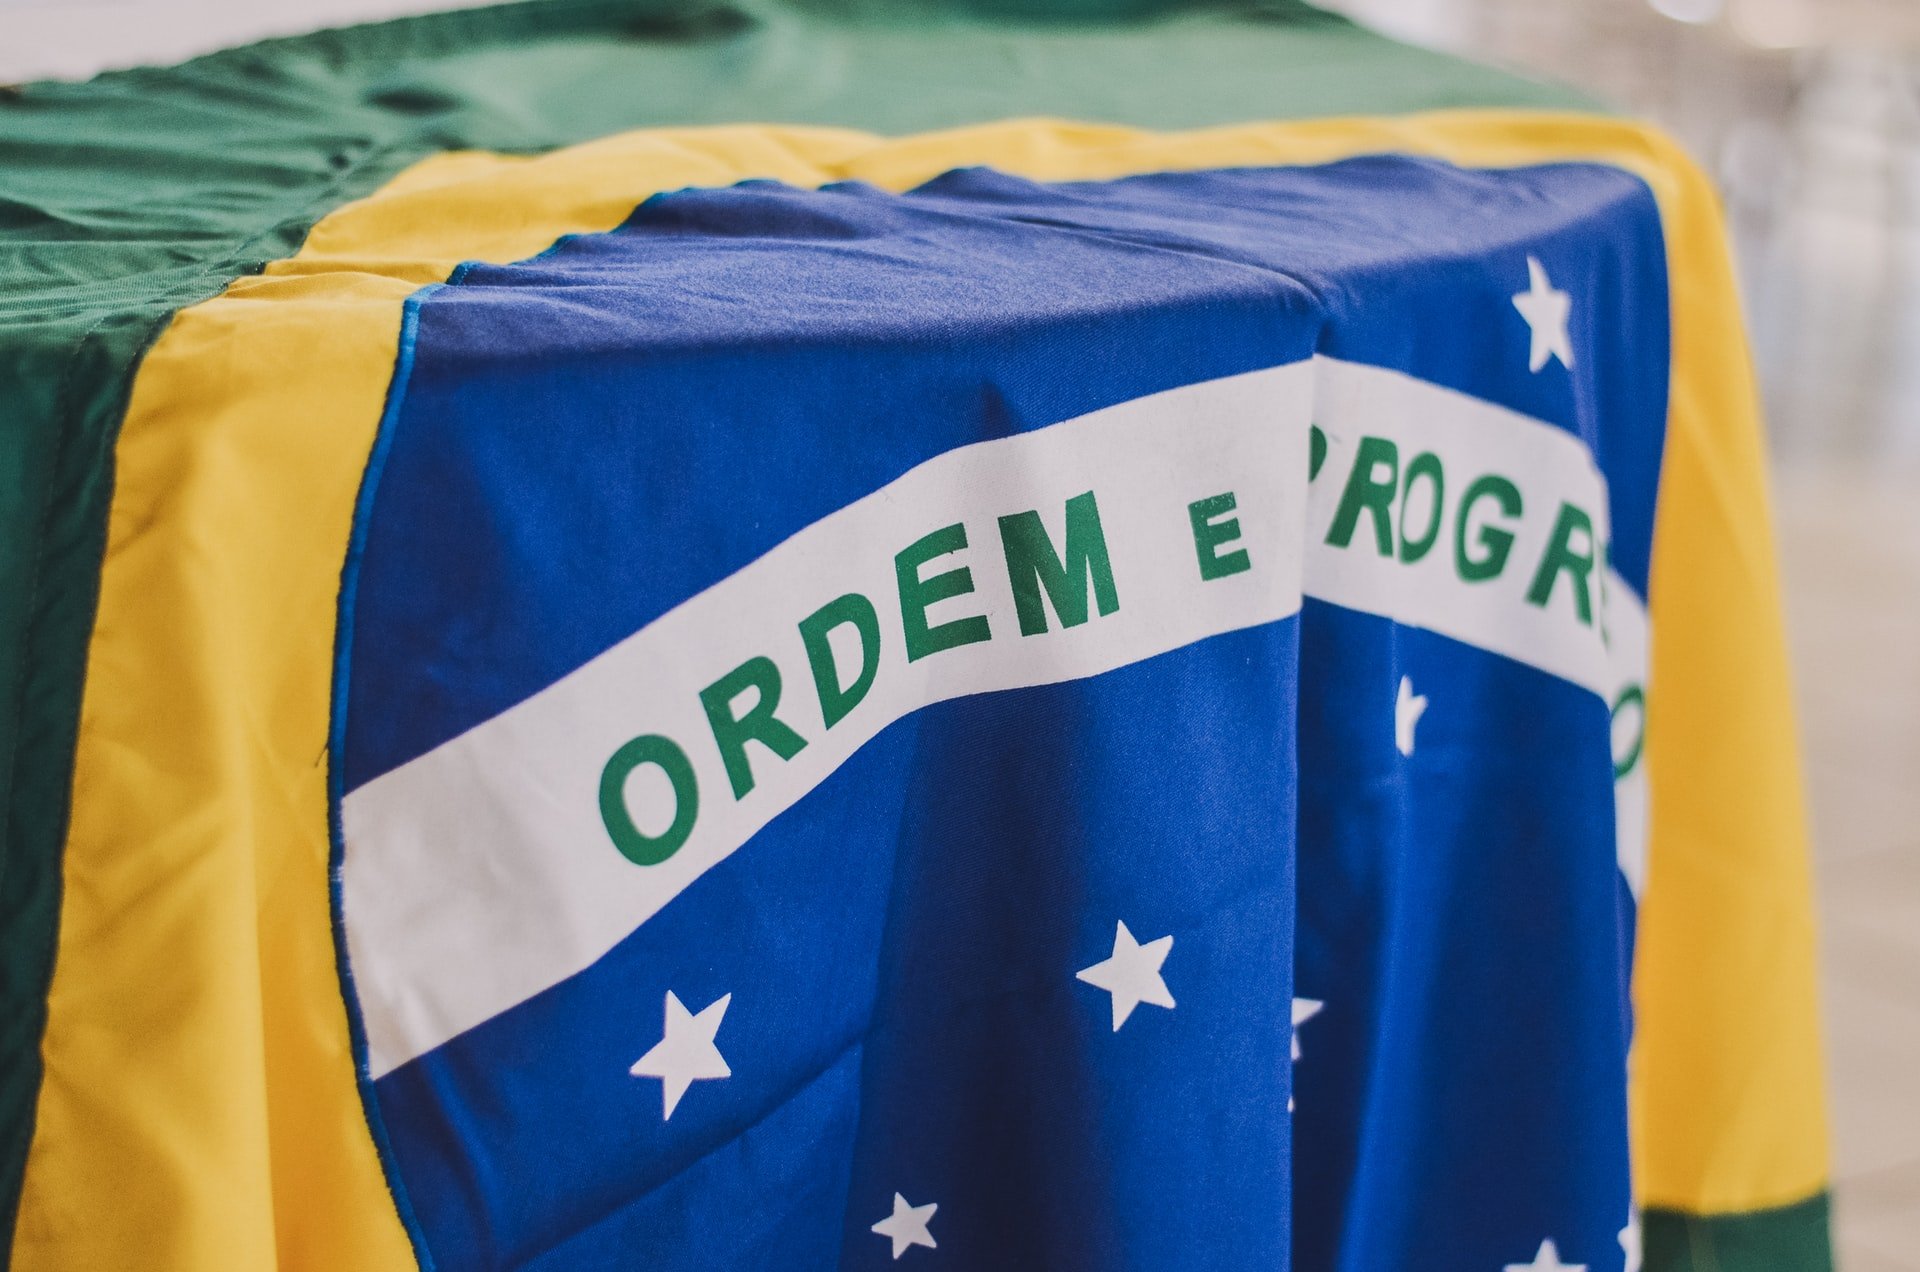 Exército brasileiro surgiu a partir do desenvolvimento do Estado brasileiro. (Fonte: Unsplash)